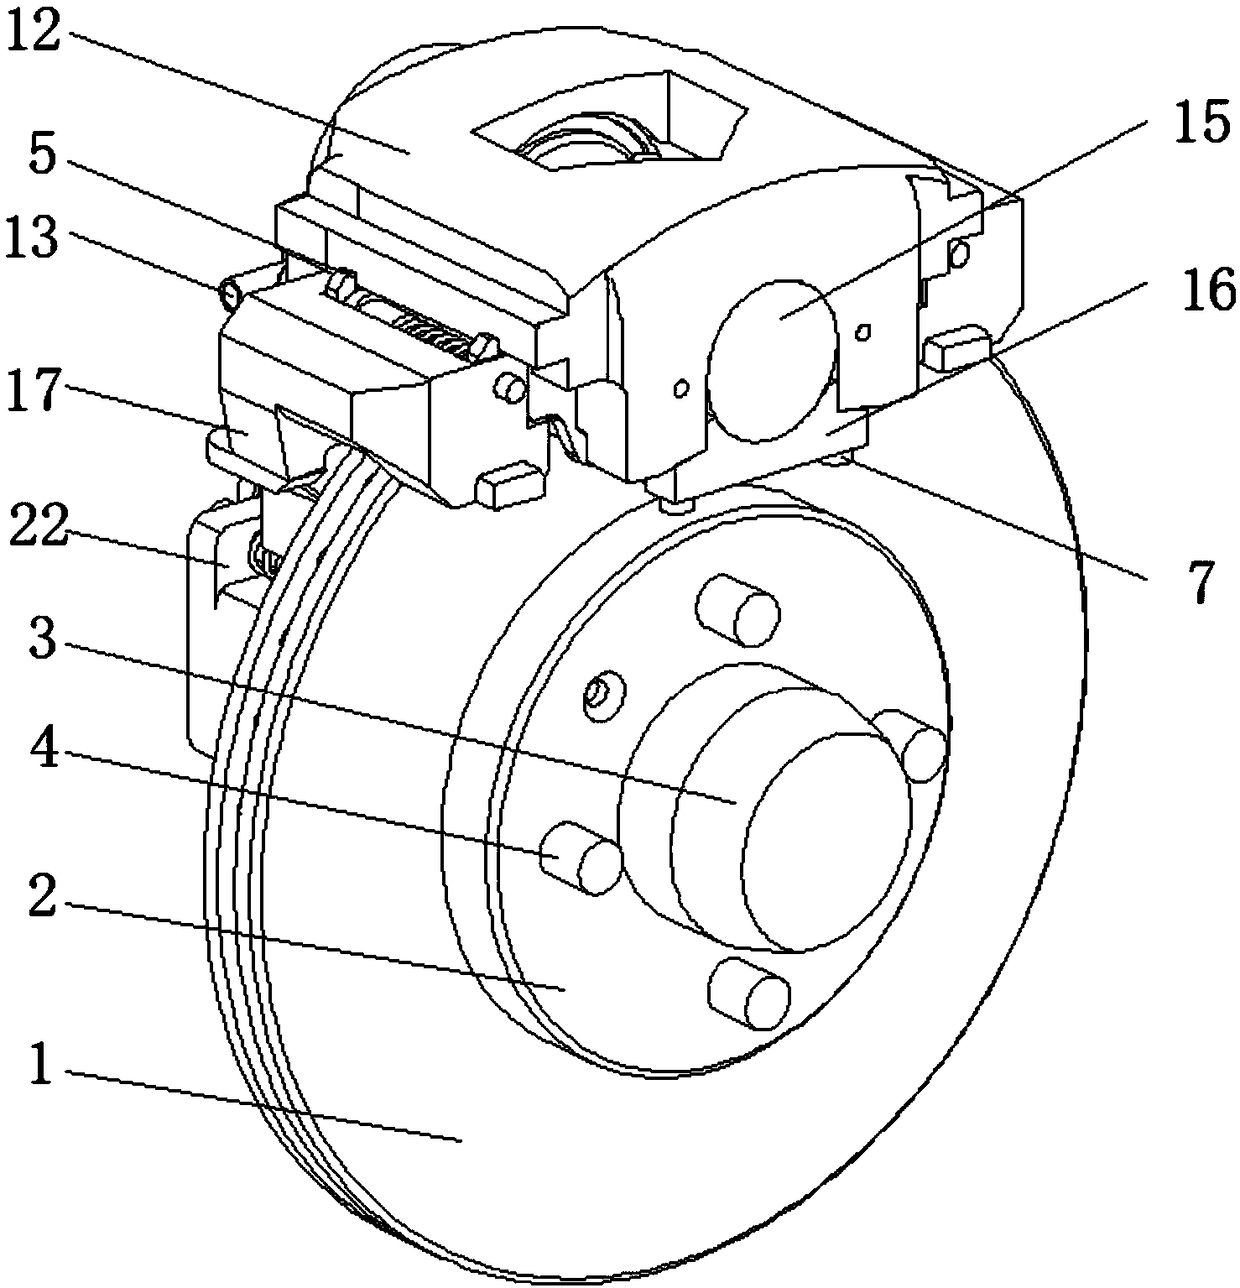 Disc brake for automobile braking system